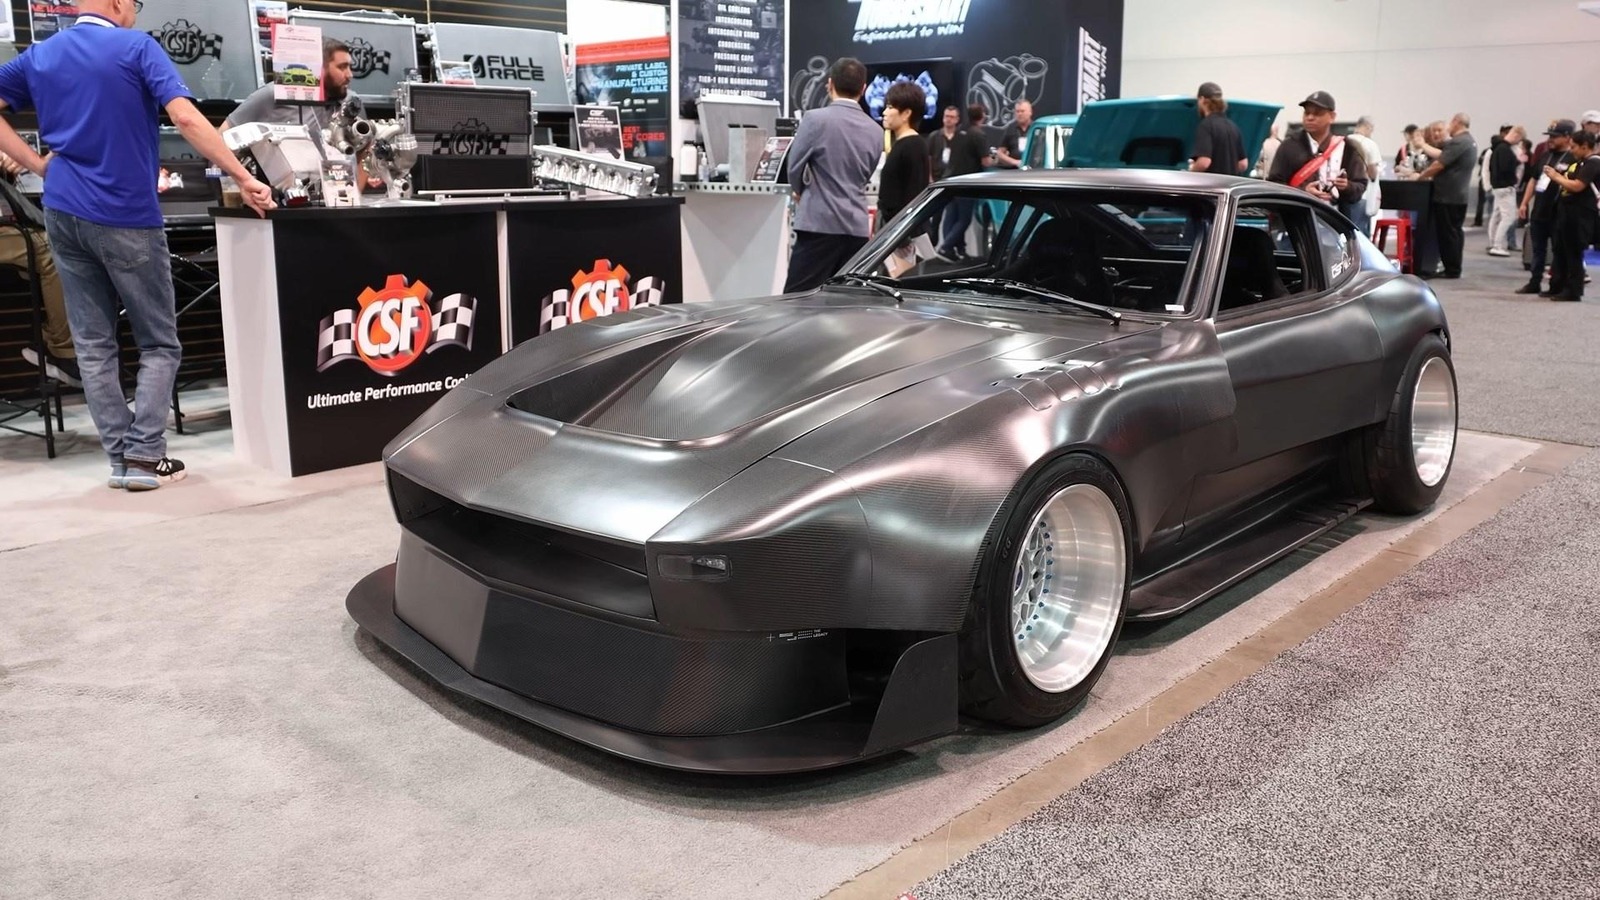 Eche un vistazo al Datsun Z que probablemente conduciría Batman